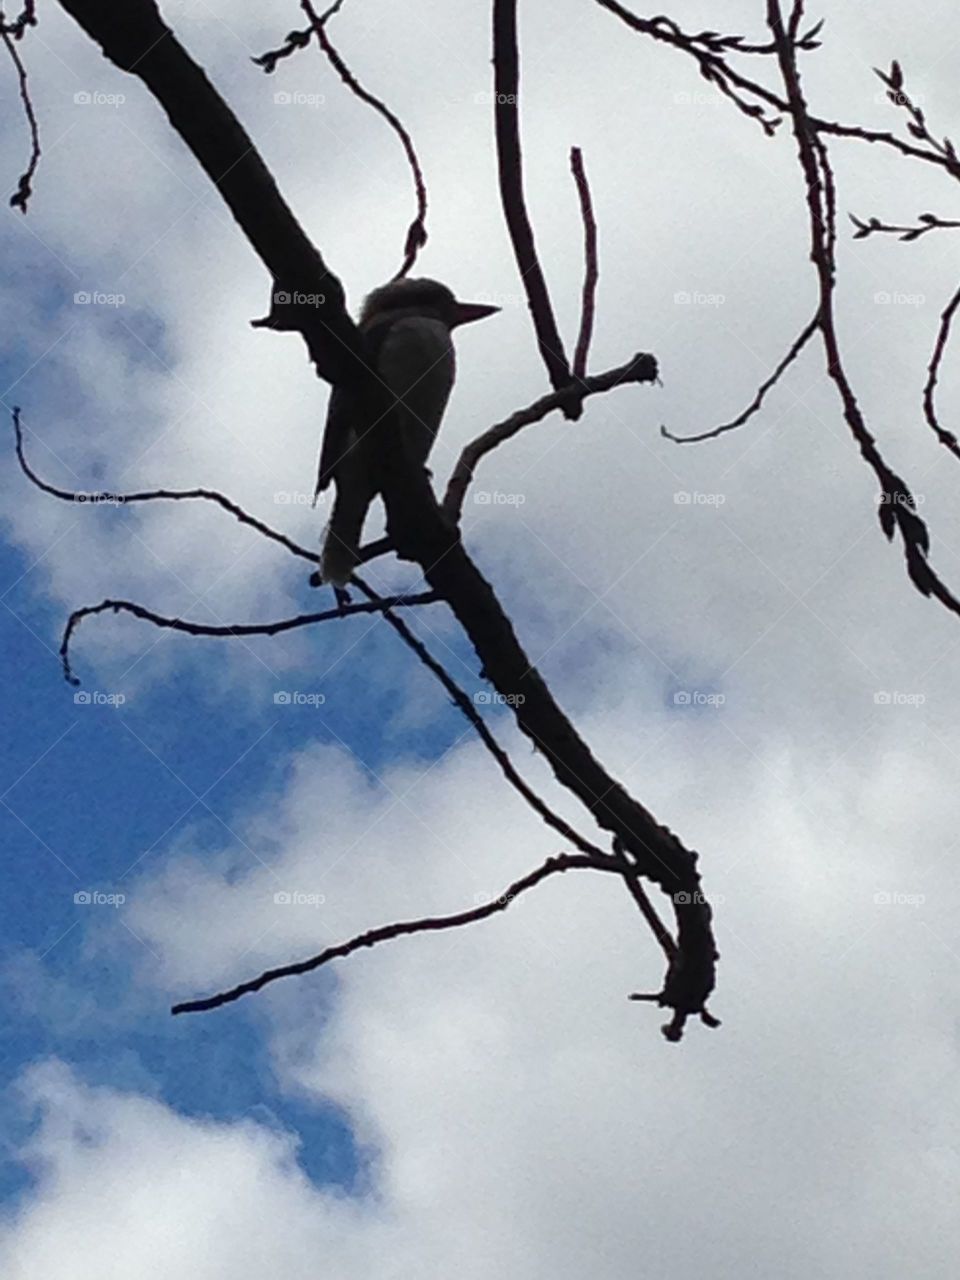 The Kookaburra is sitting on the branch 